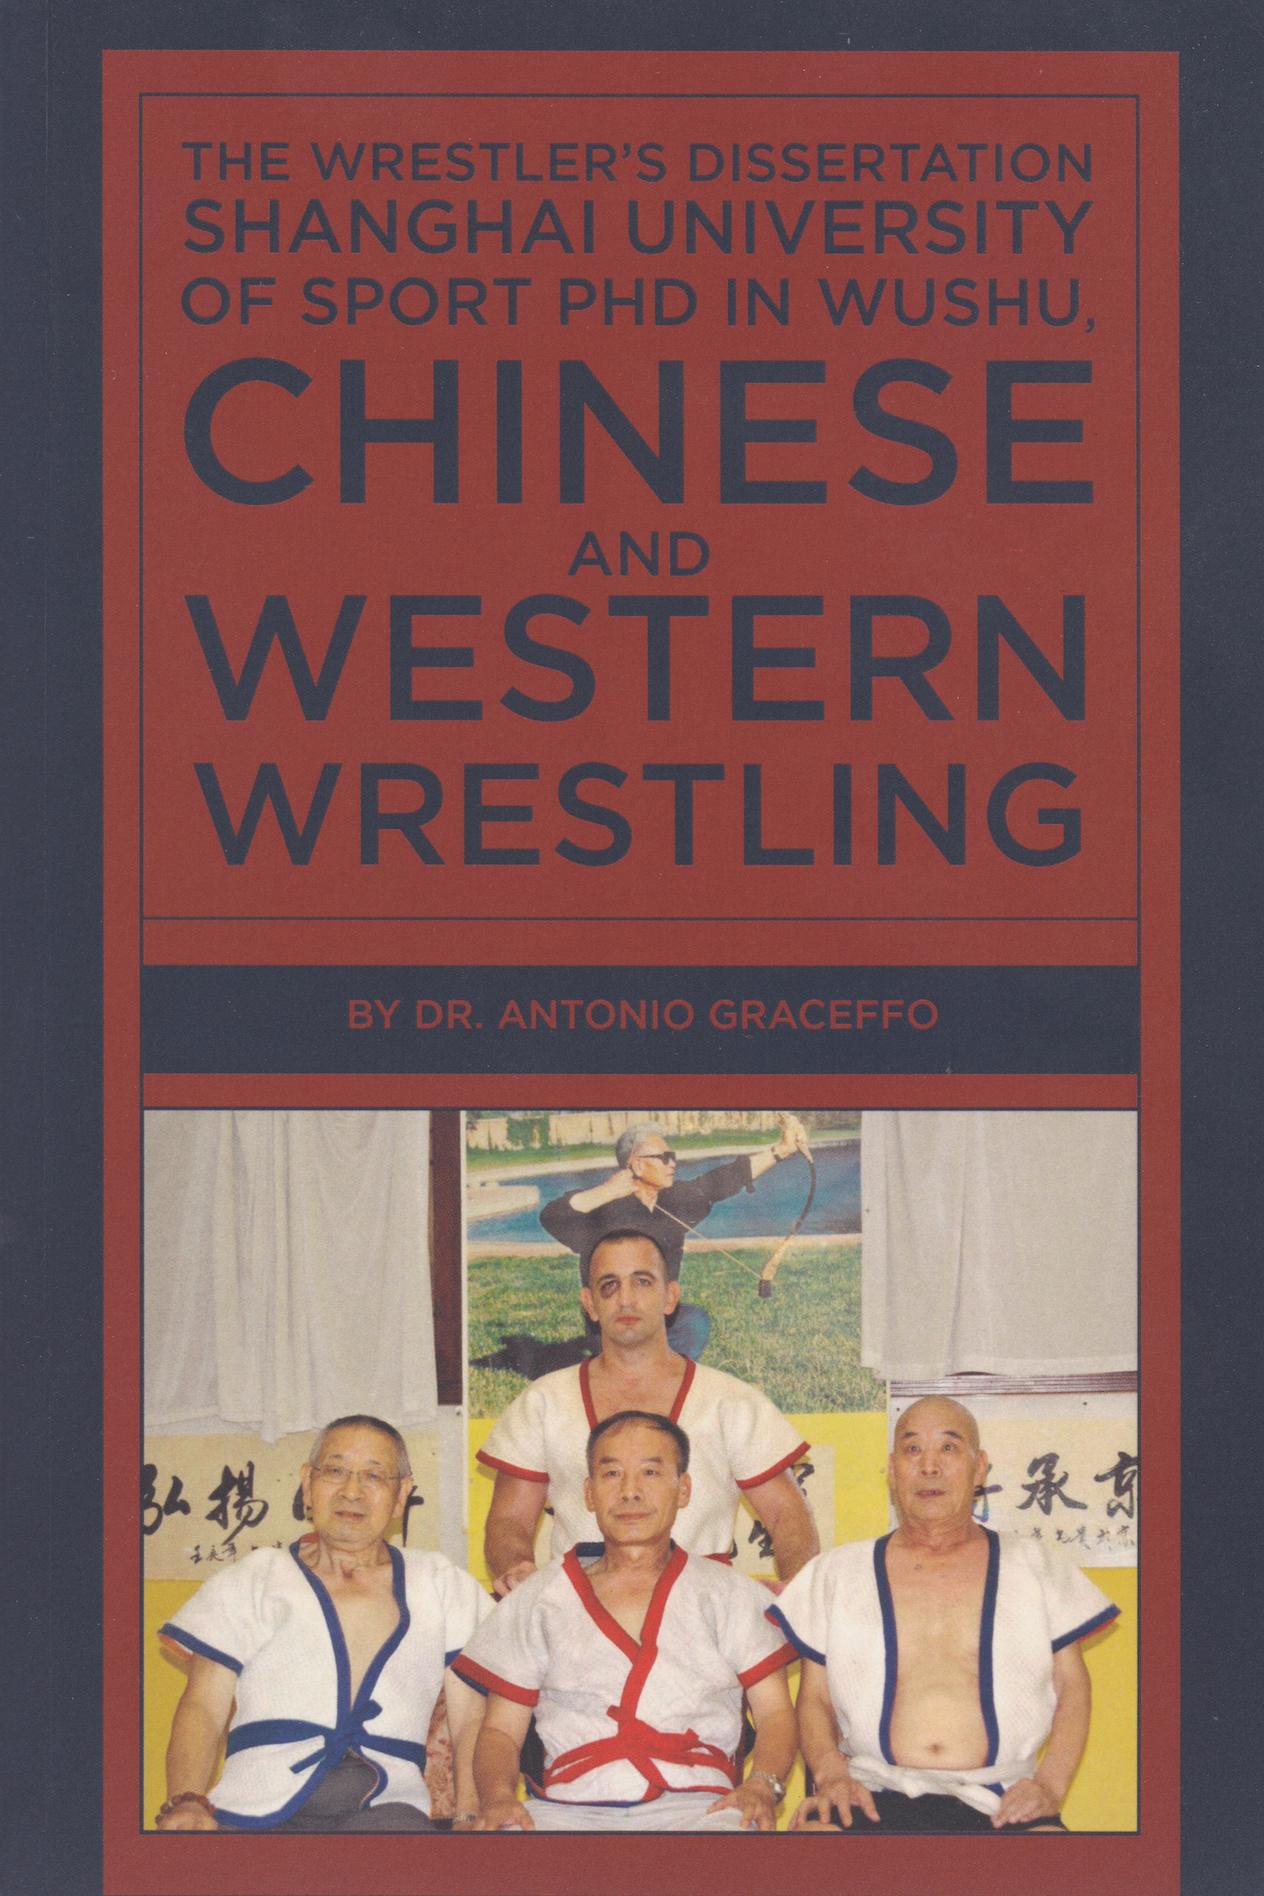 The Wrestler’s Dissertation: Shanghai University of Sport PhD in Wushu, Chinese & Western Wrestling Book by Antonio Graceffo - Budovideos